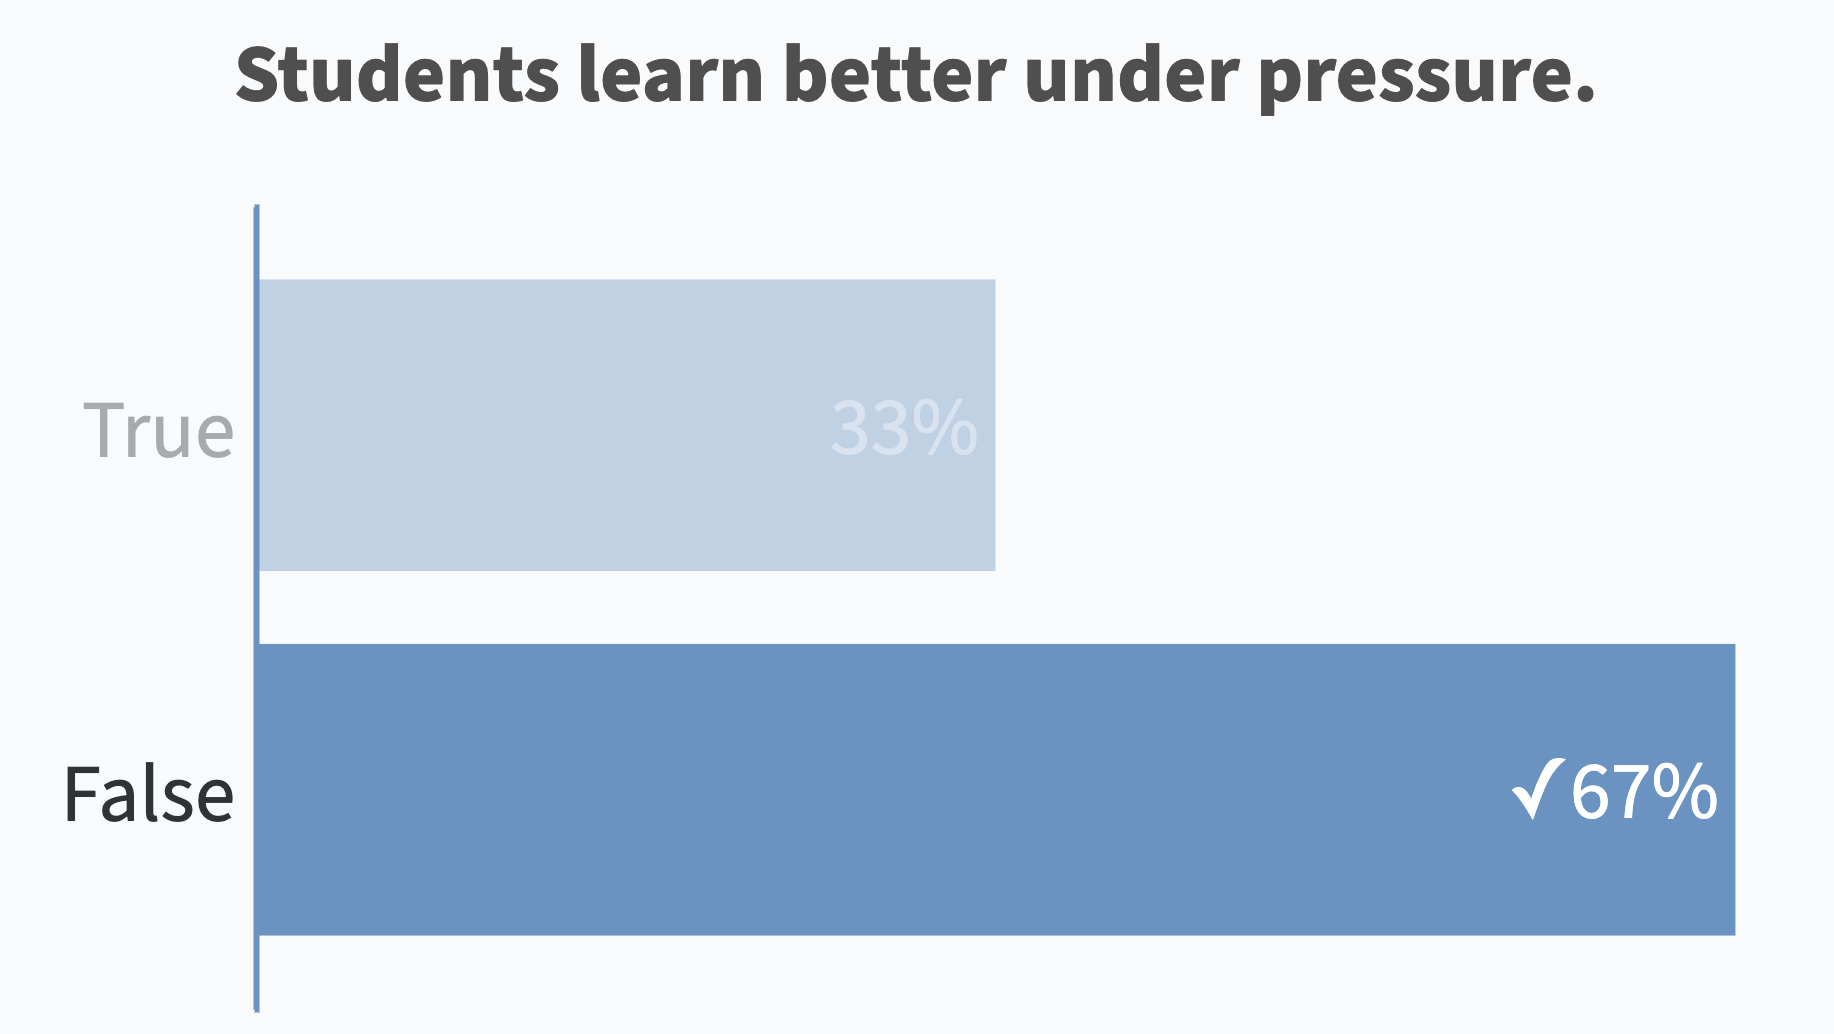 Students learn better under pressure. (False: 67% correct)